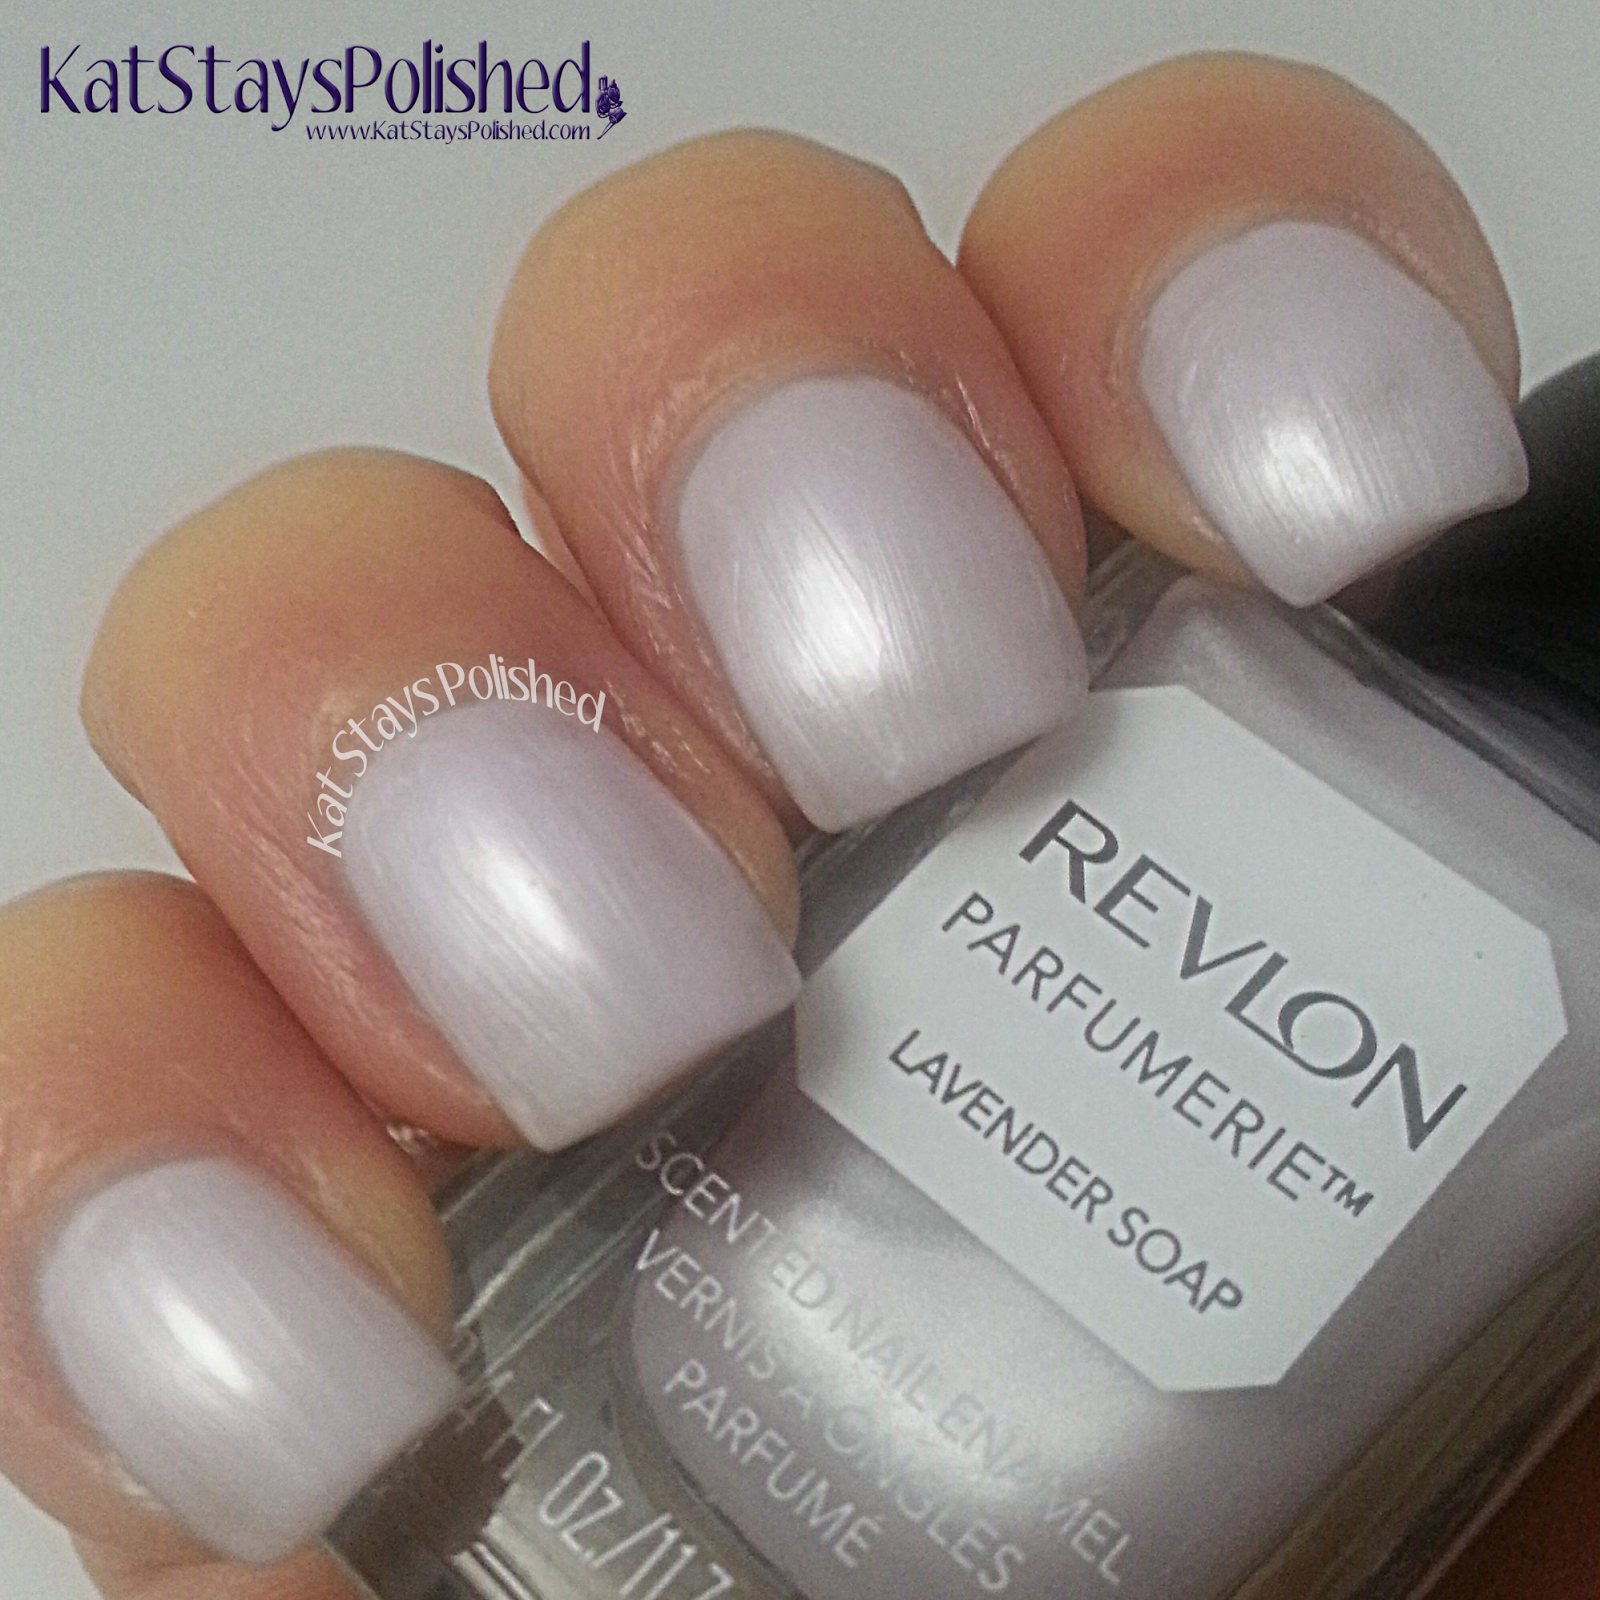 Revlon Parfumerie - Lavender Soap | Kat Stays Polished